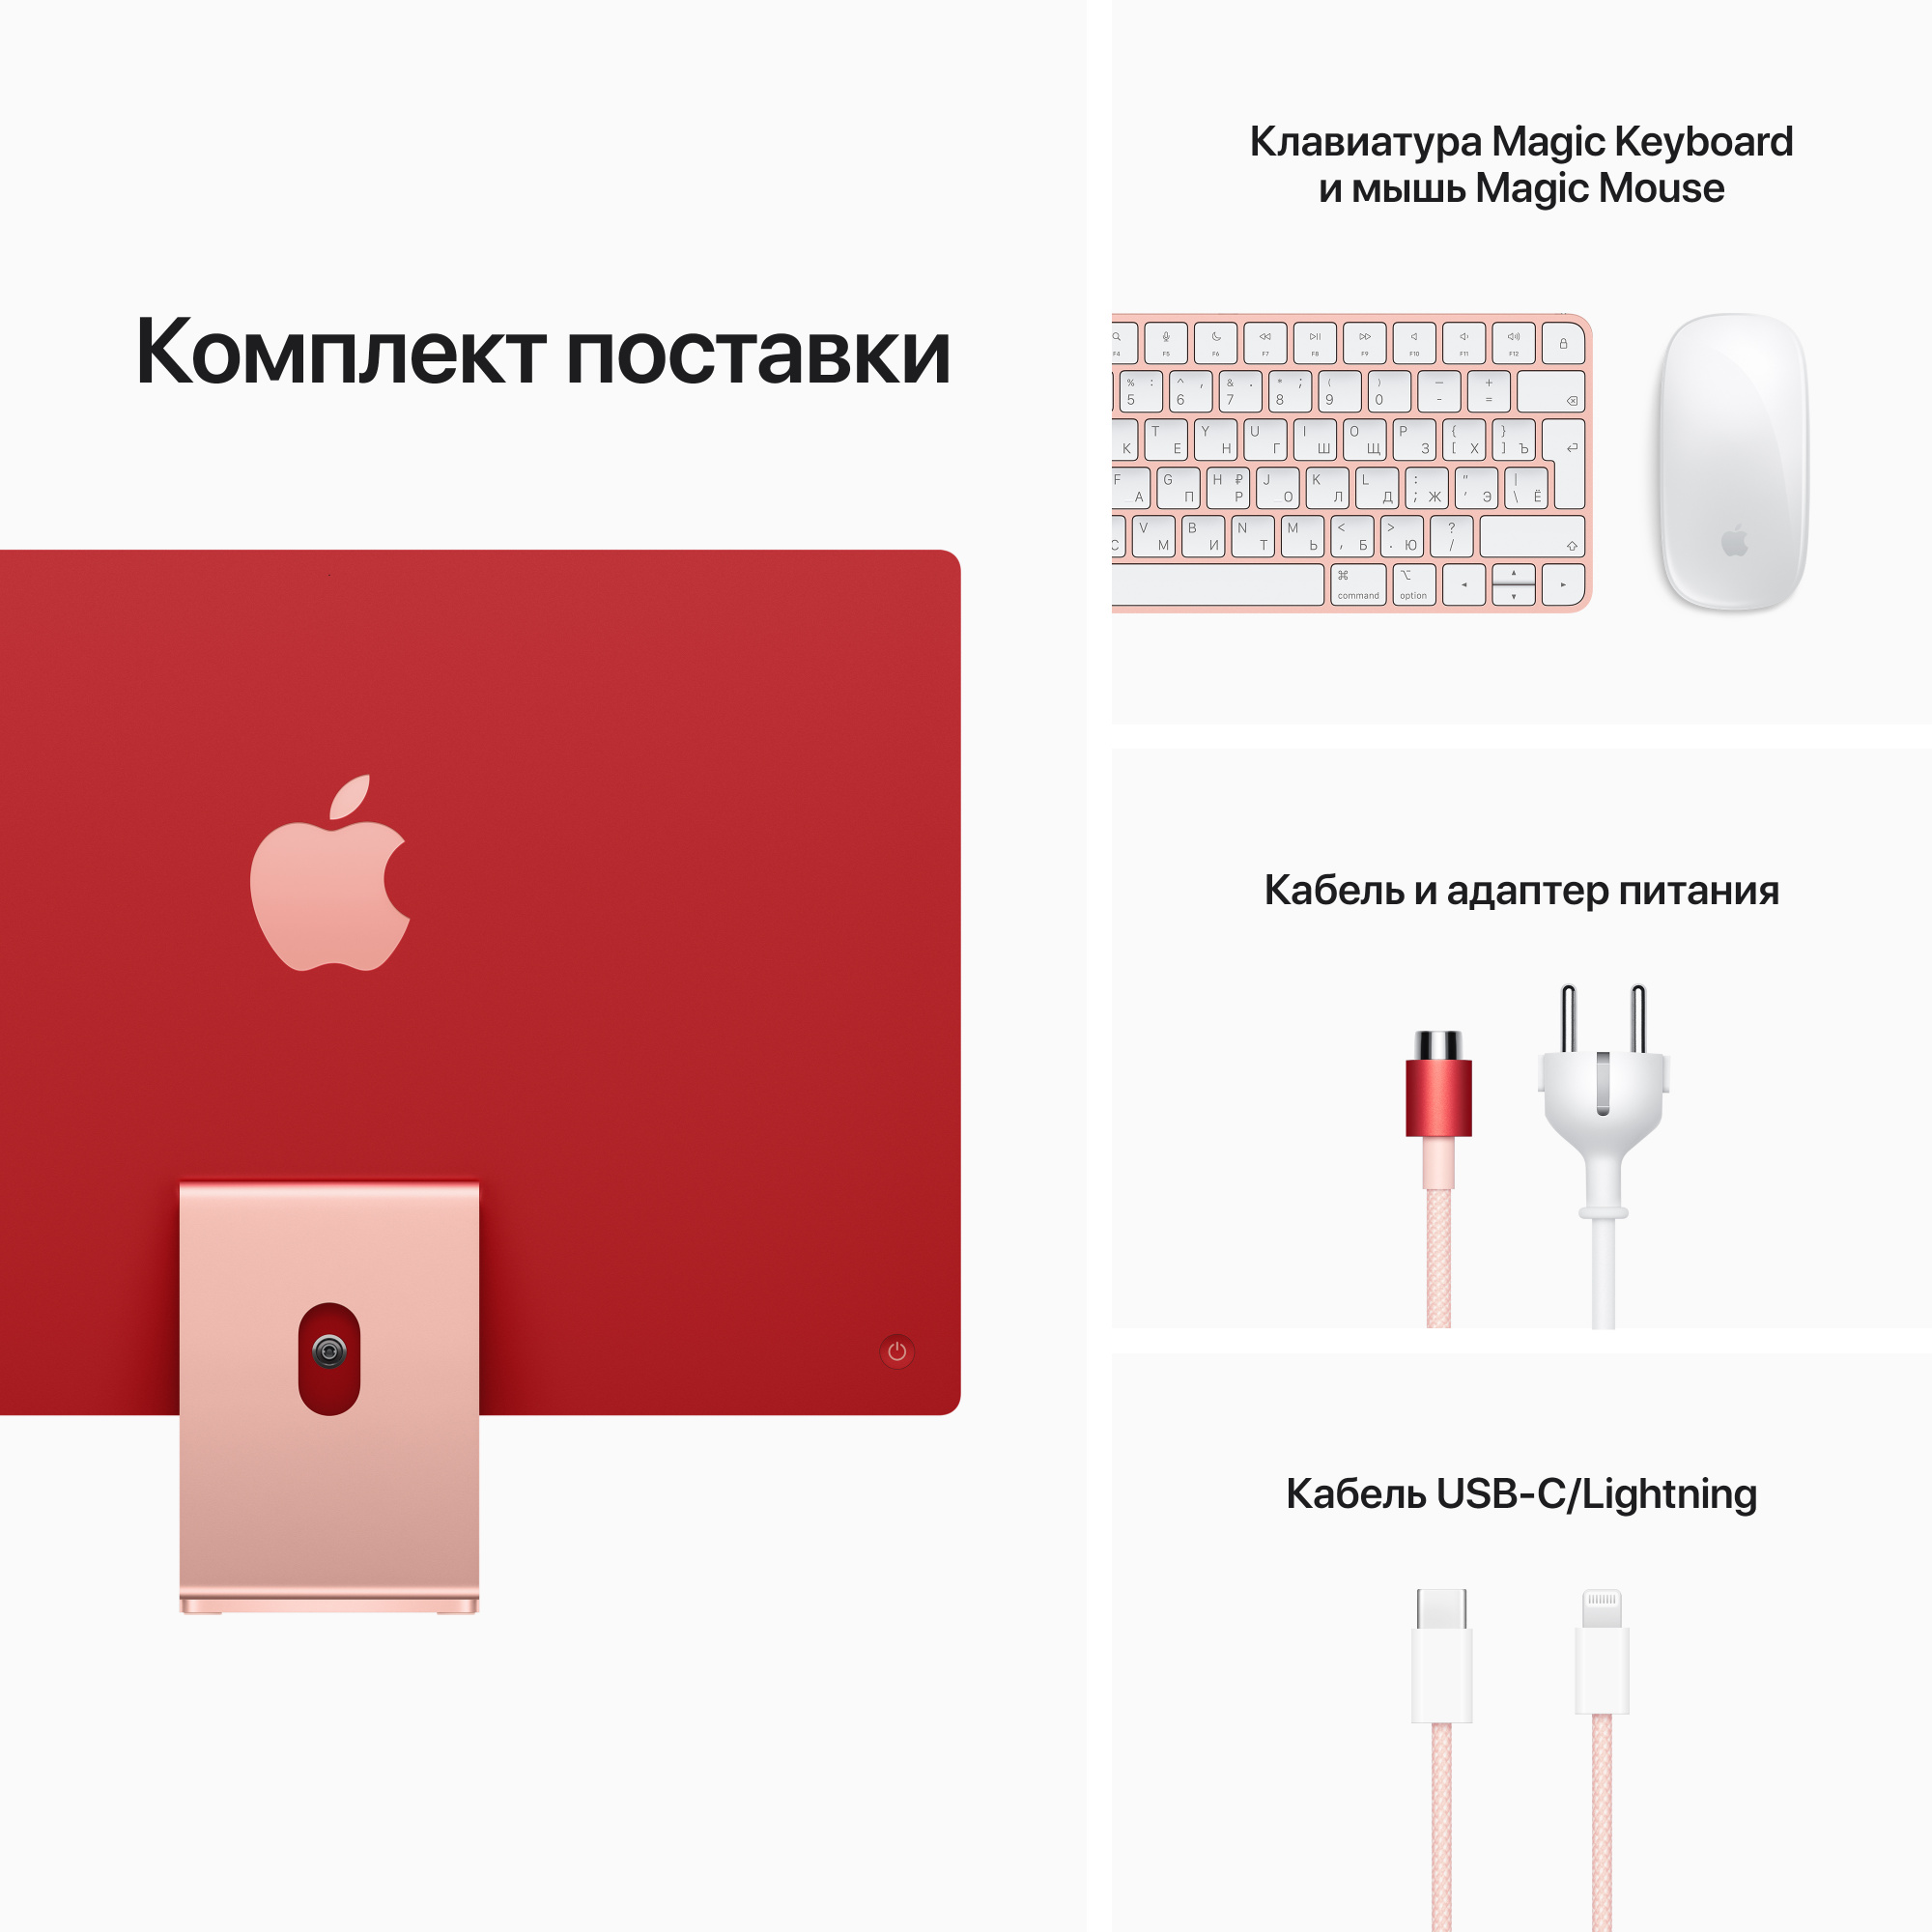 Apple 24 ru